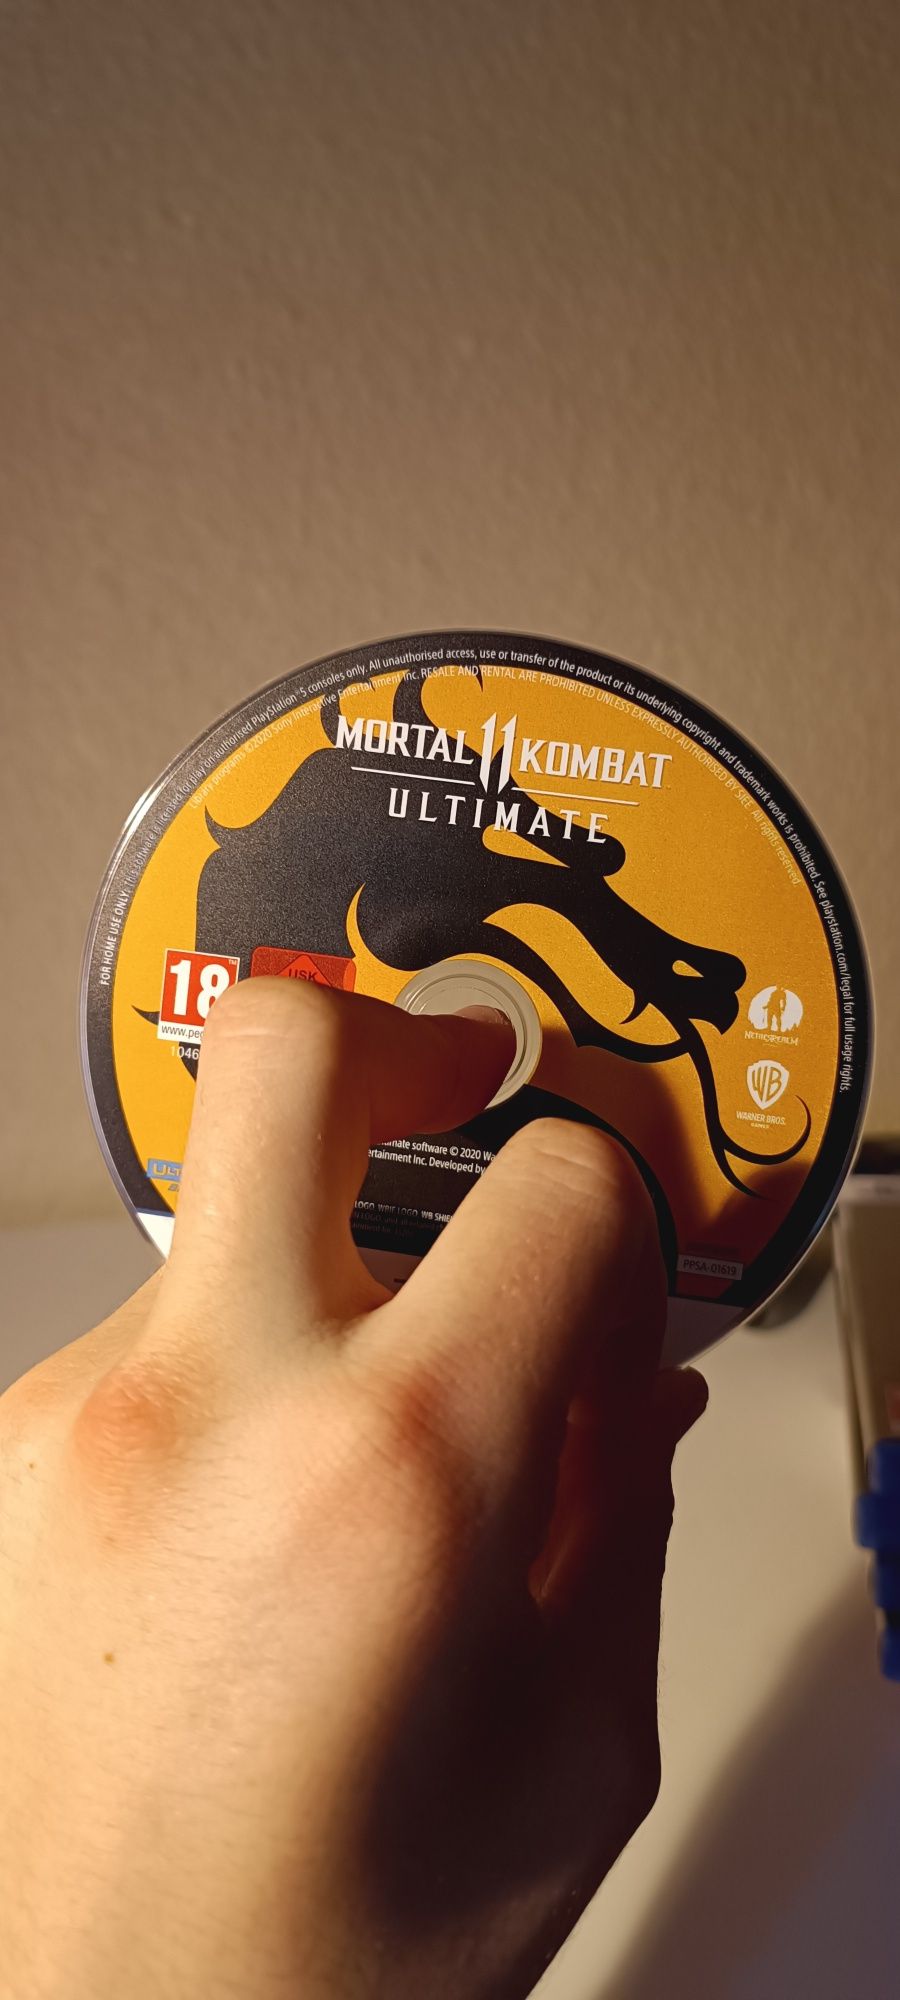 Mortal kombat 11 Ultimate with code